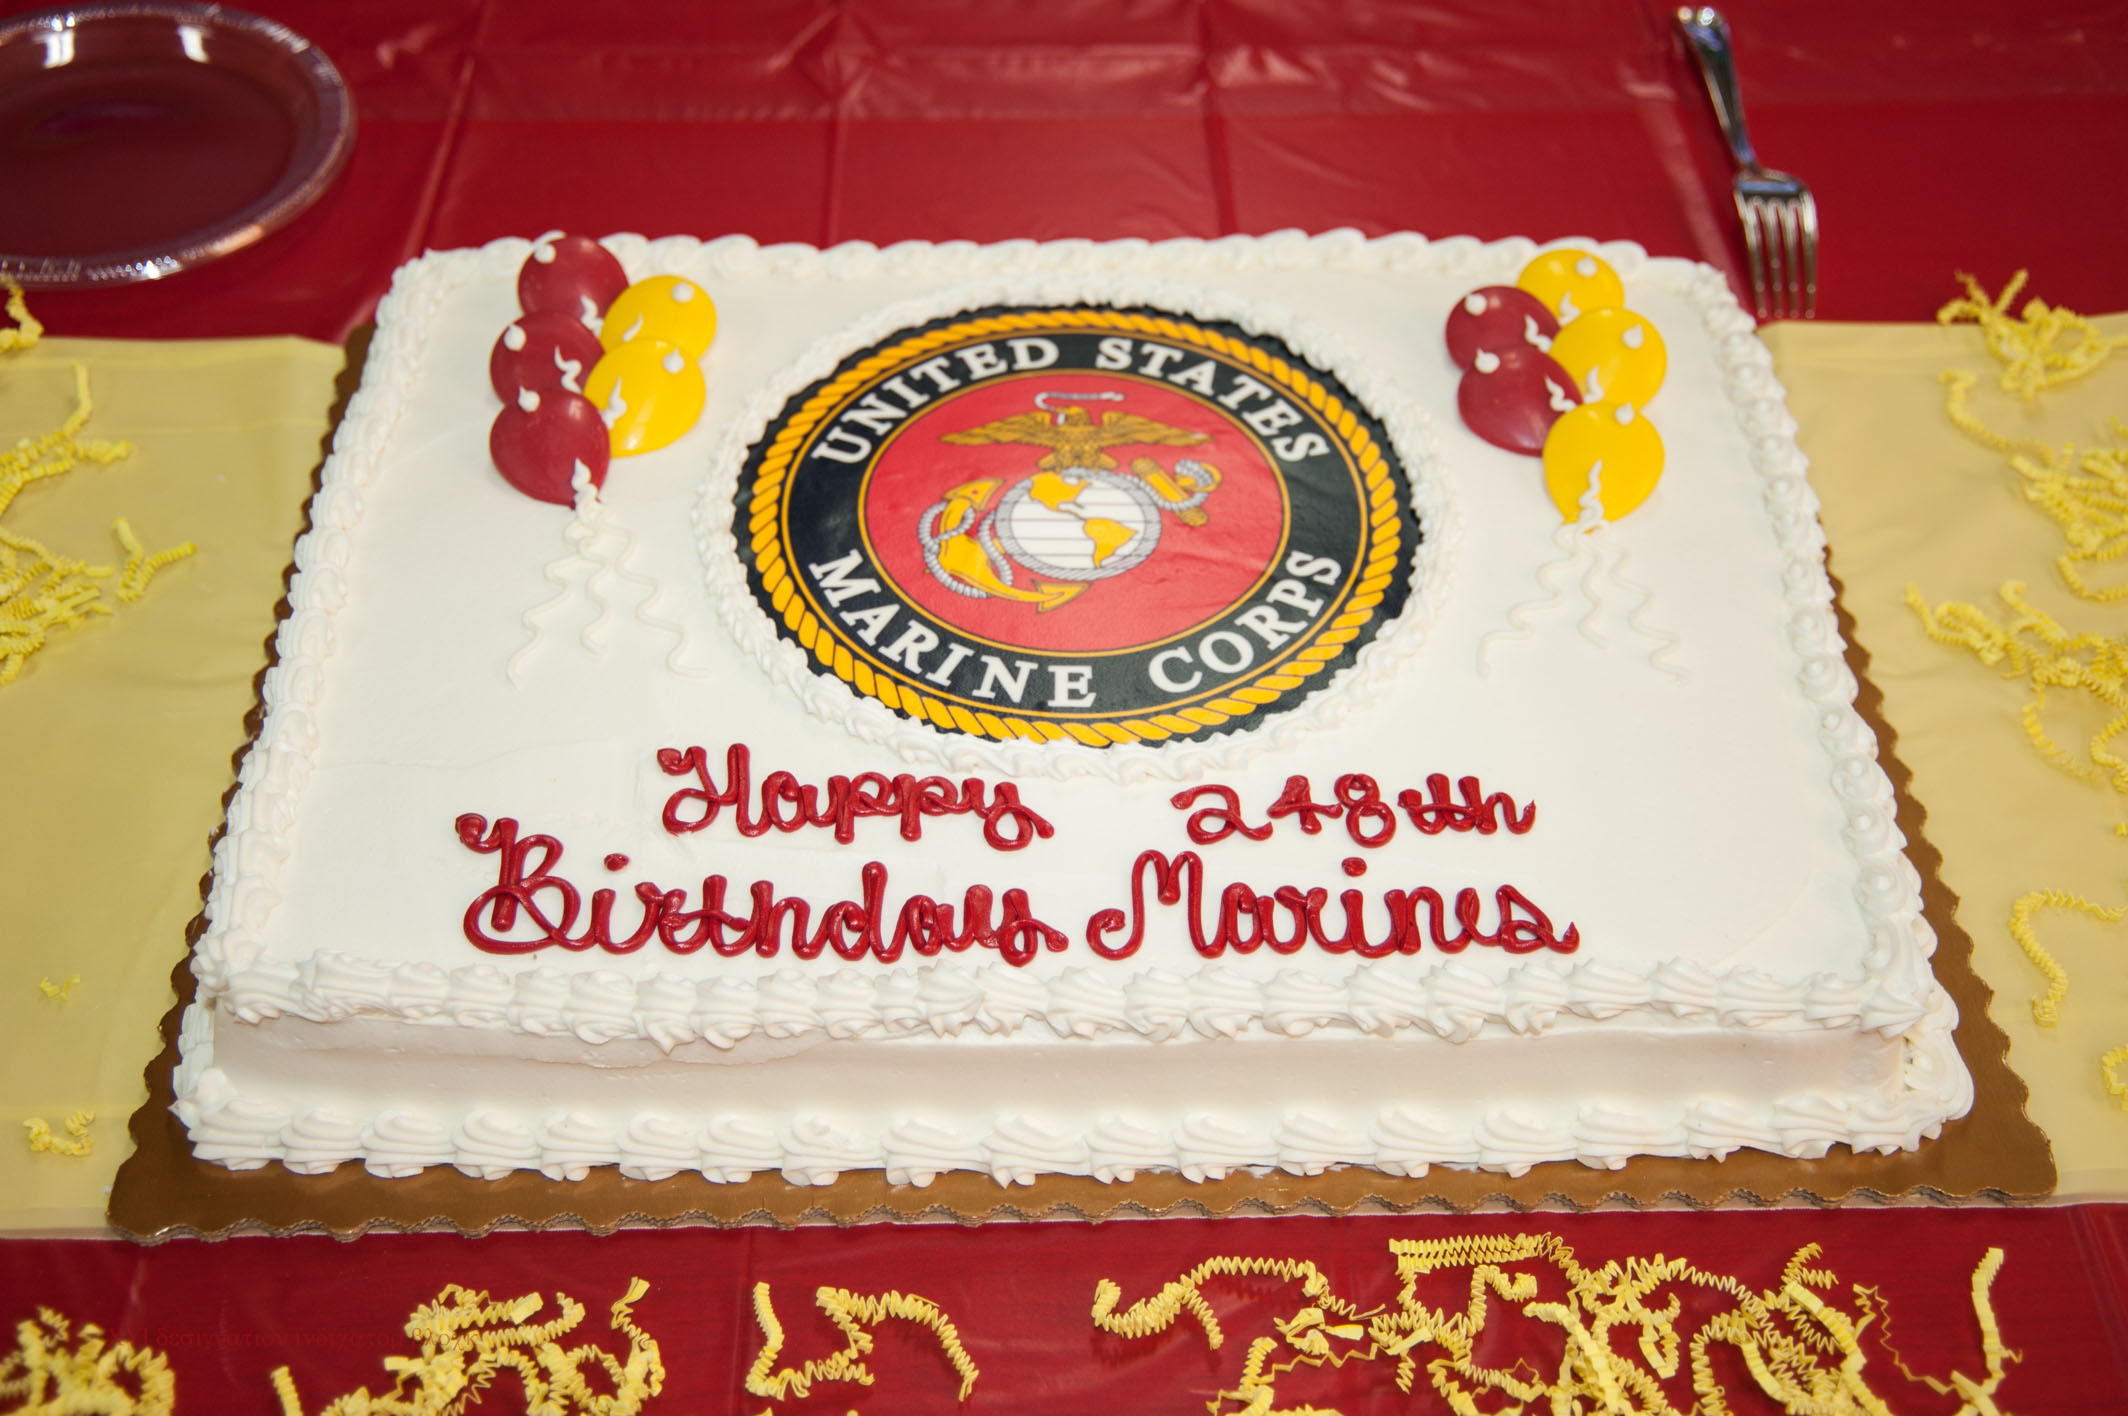 NIWC Atlantic celebrates USMC 248th Birthday in Hampton Roads, VA on 7 Nov 2023.